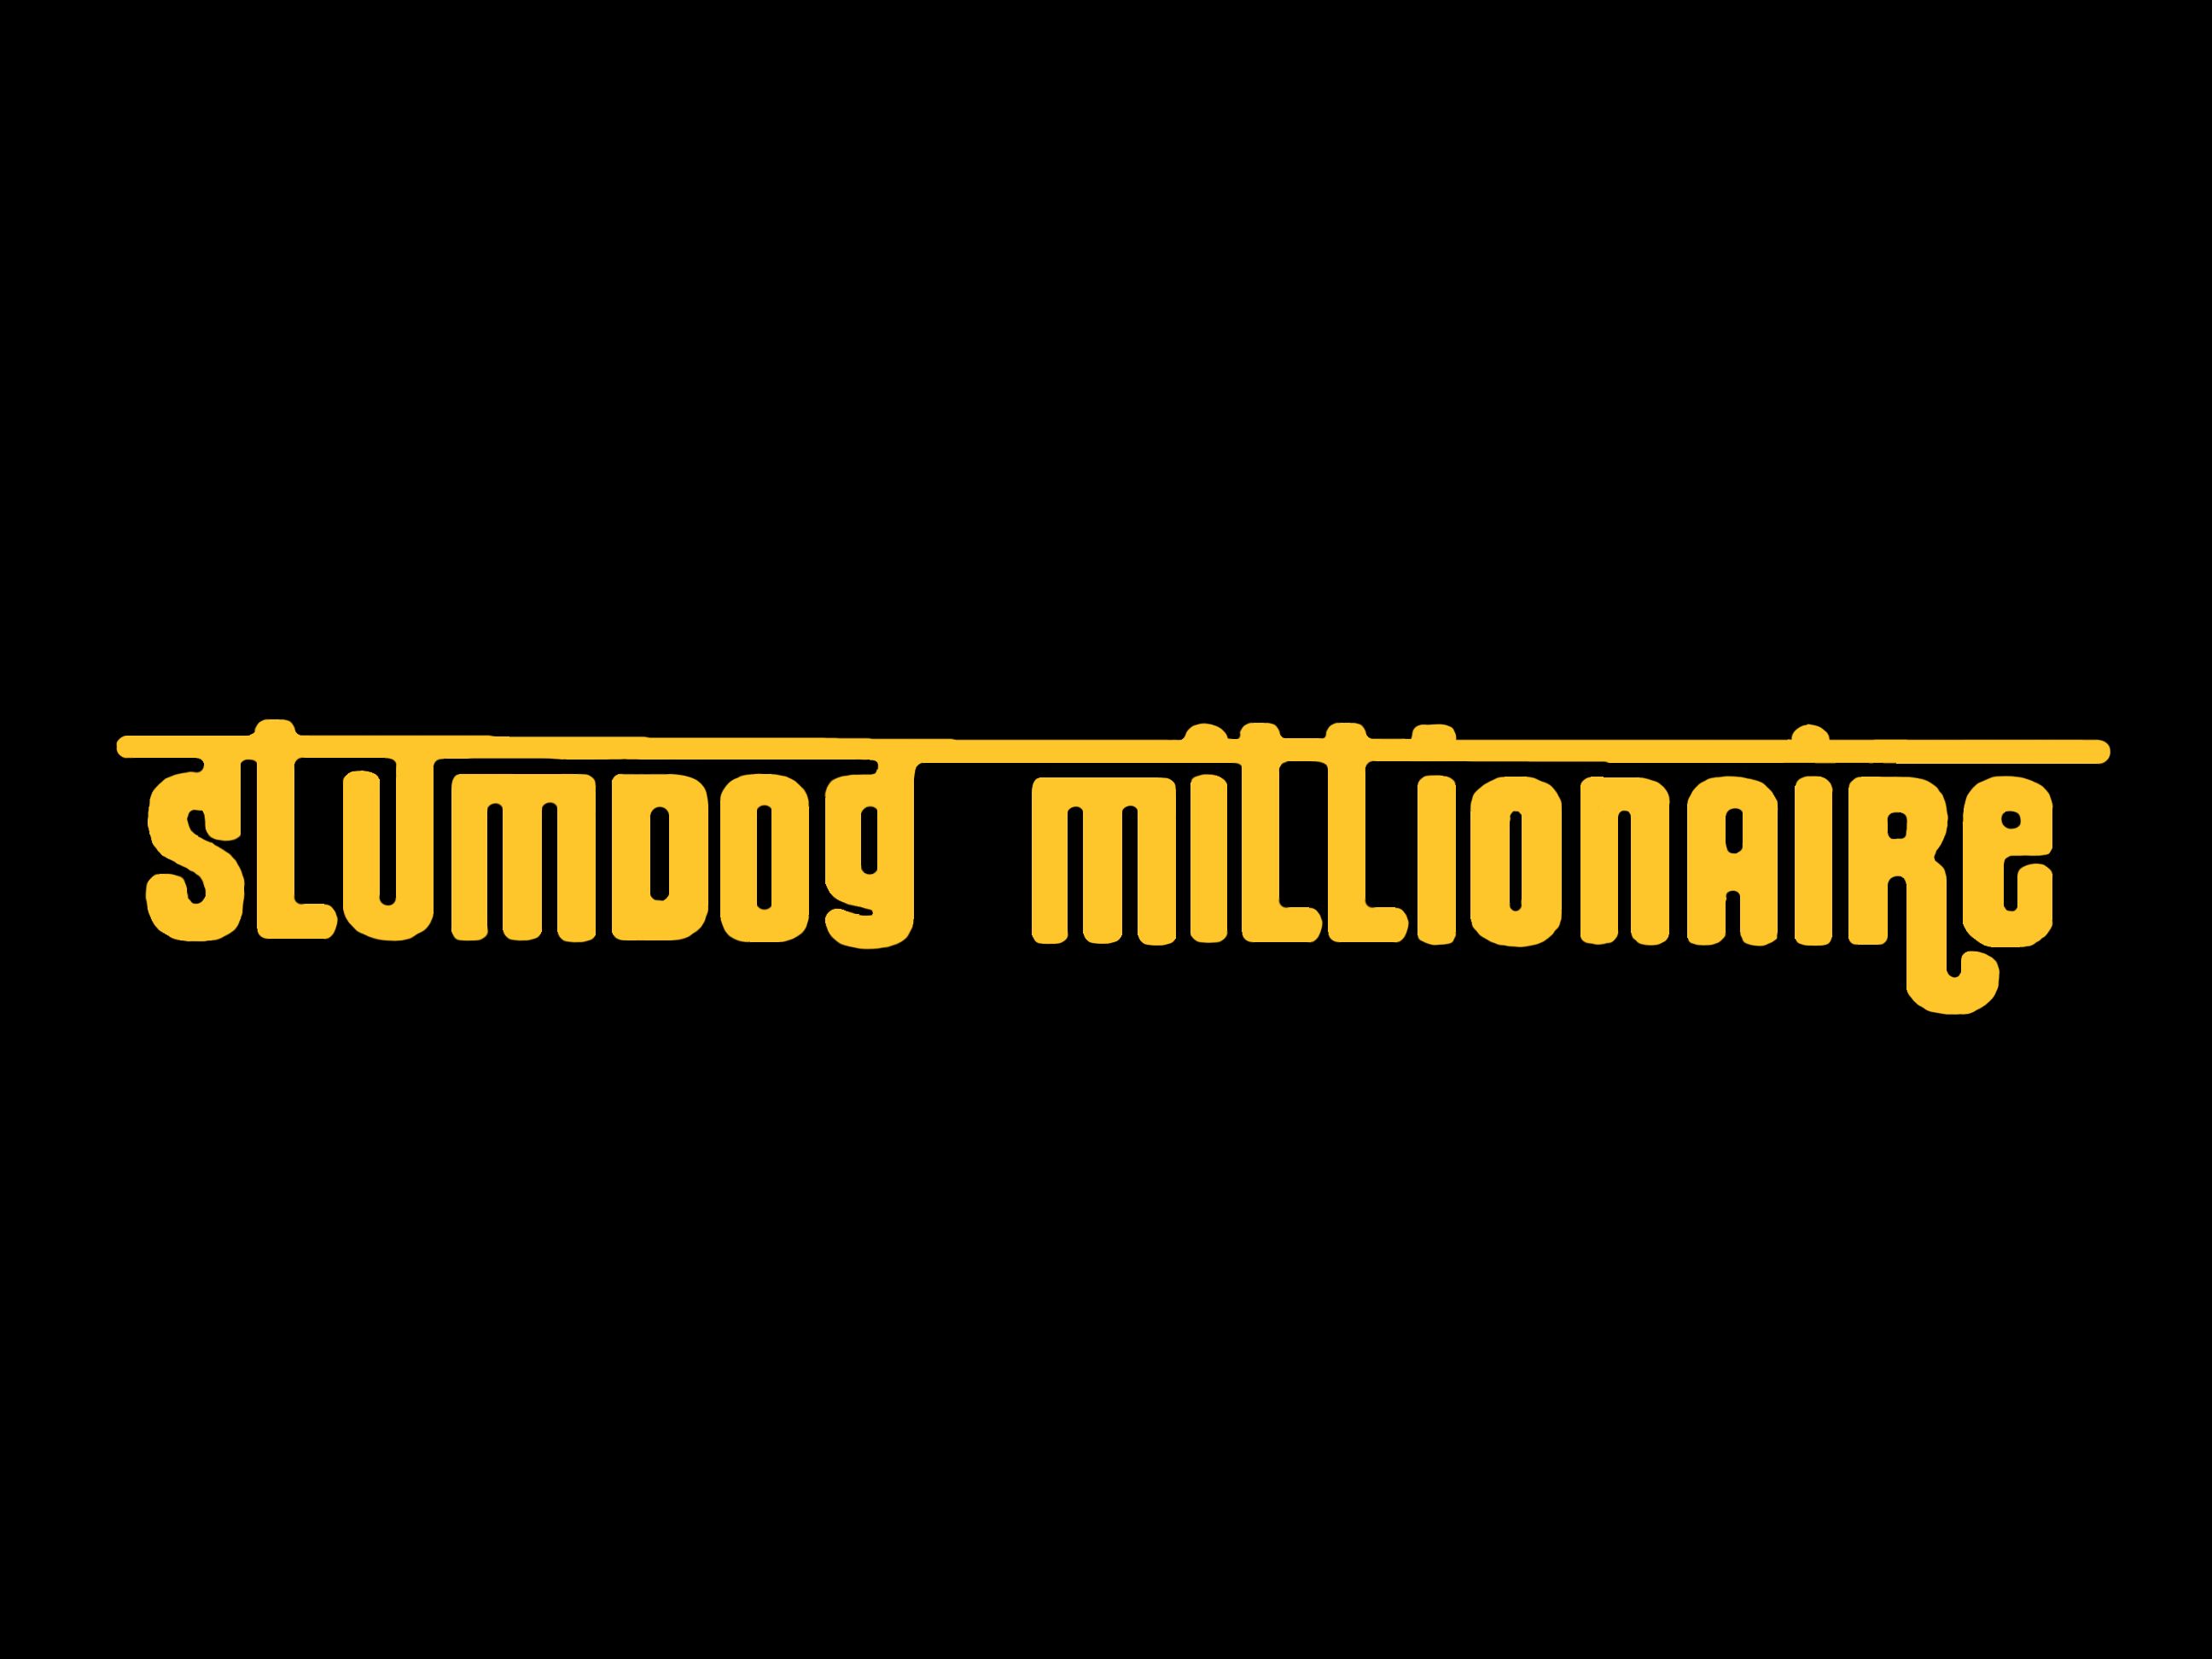 Millionaire Wallpaper  Medium